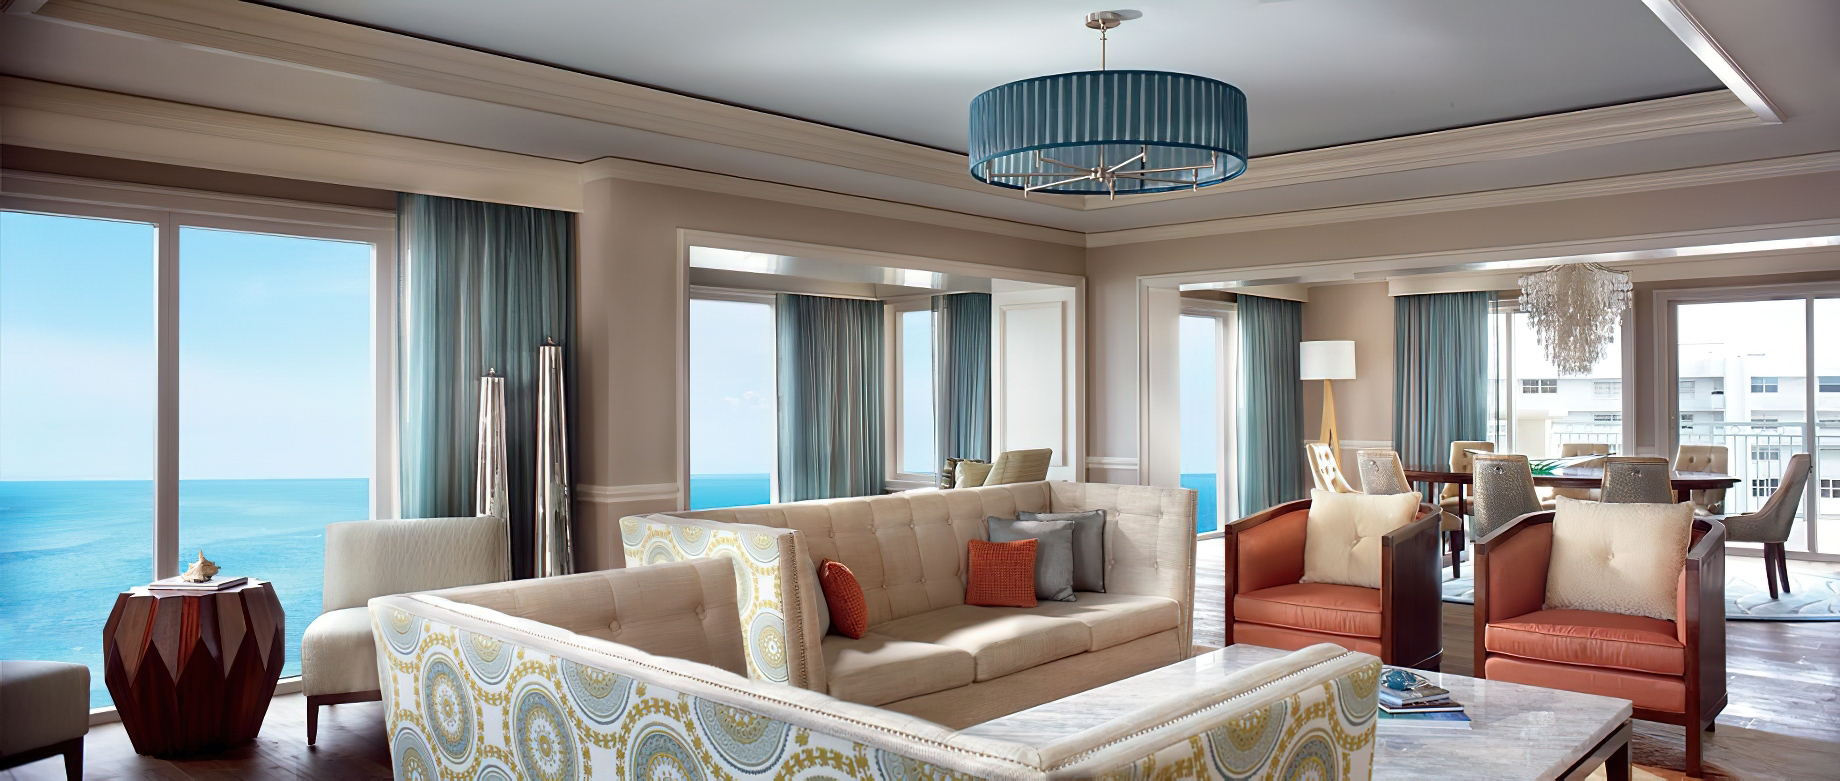 The Ritz-Carlton Key Biscayne, Miami Hotel – Miami, FL, USA – Presidential Suite Interior